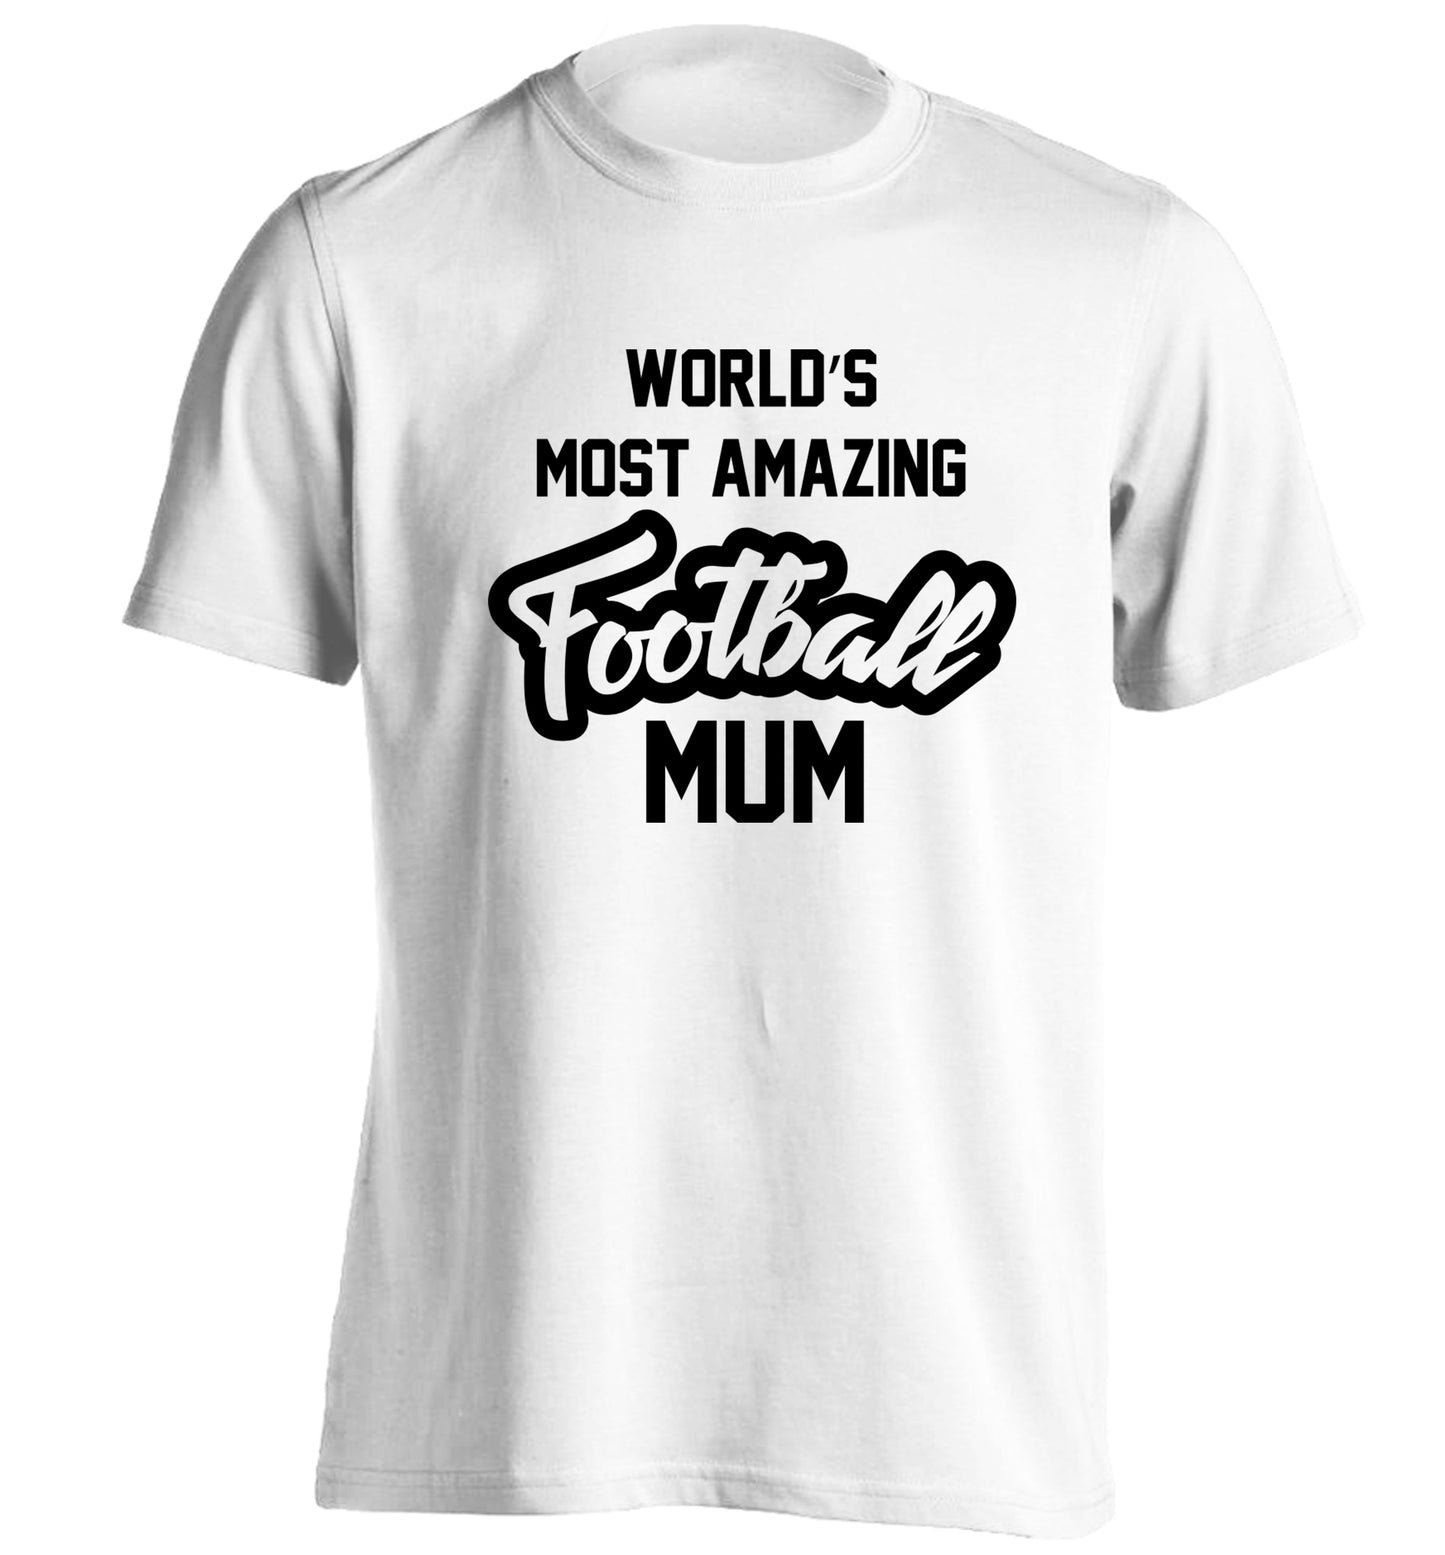 Worlds most amazing football mum adults unisexwhite Tshirt 2XL